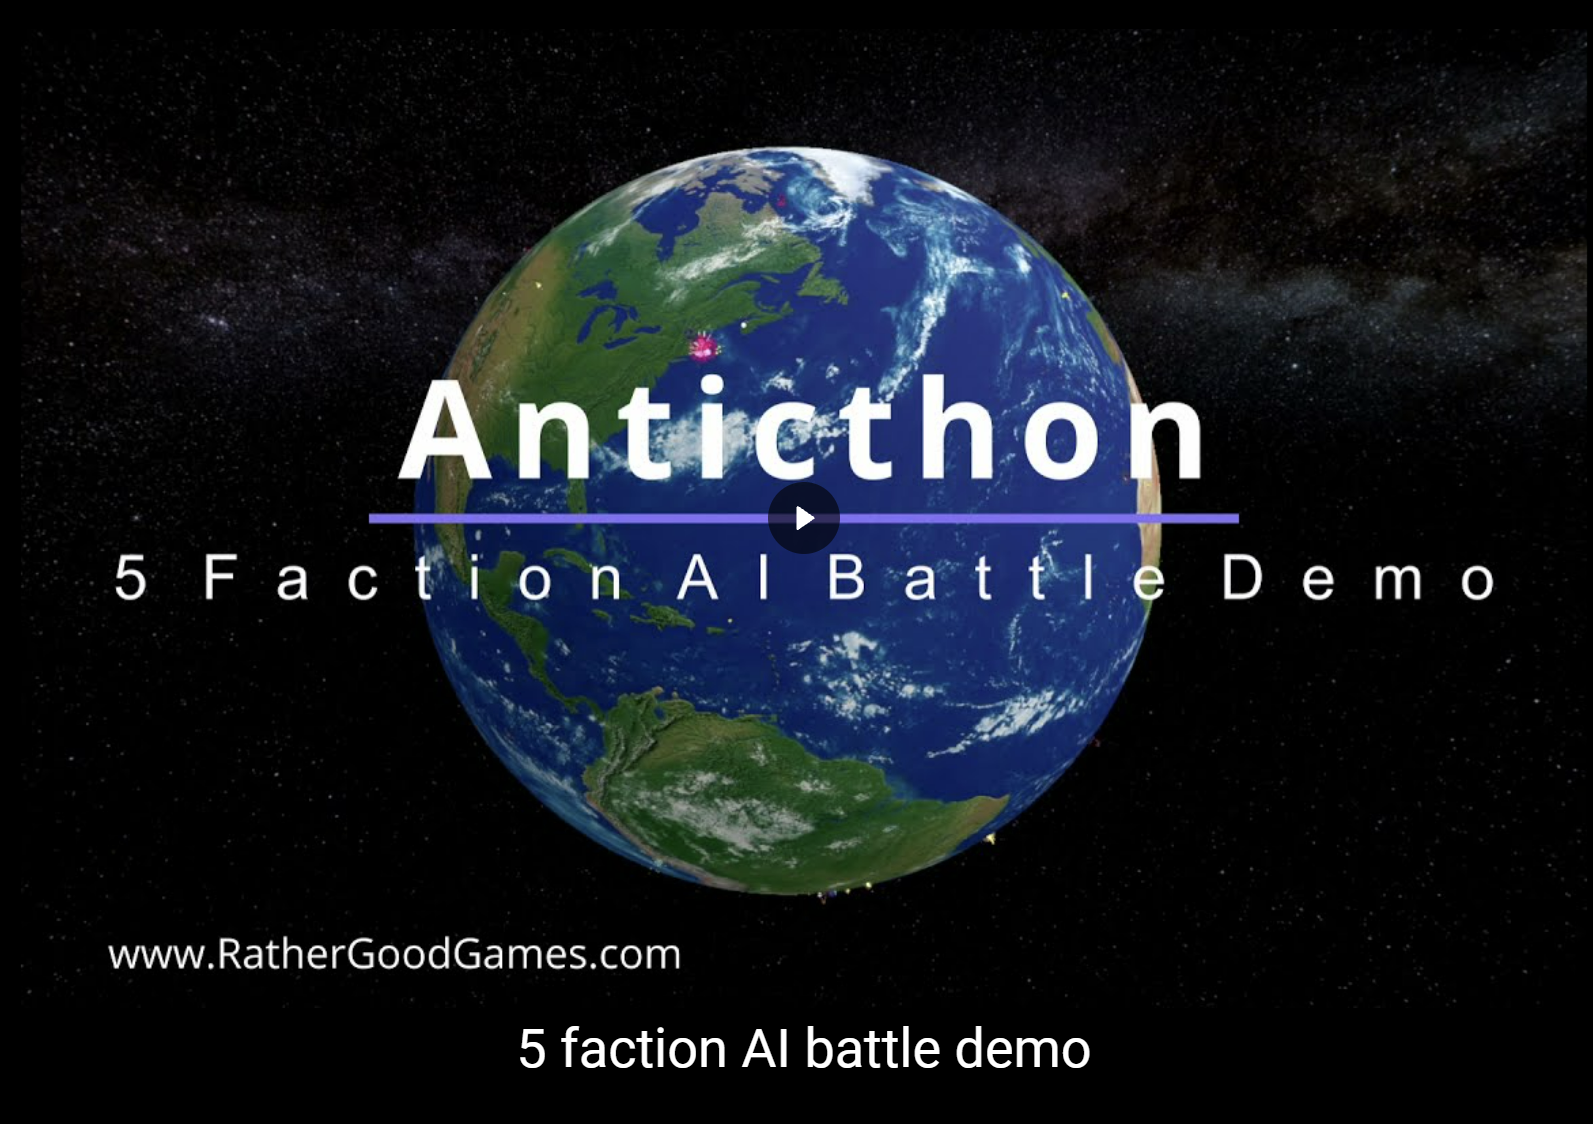 5 faction battle demo